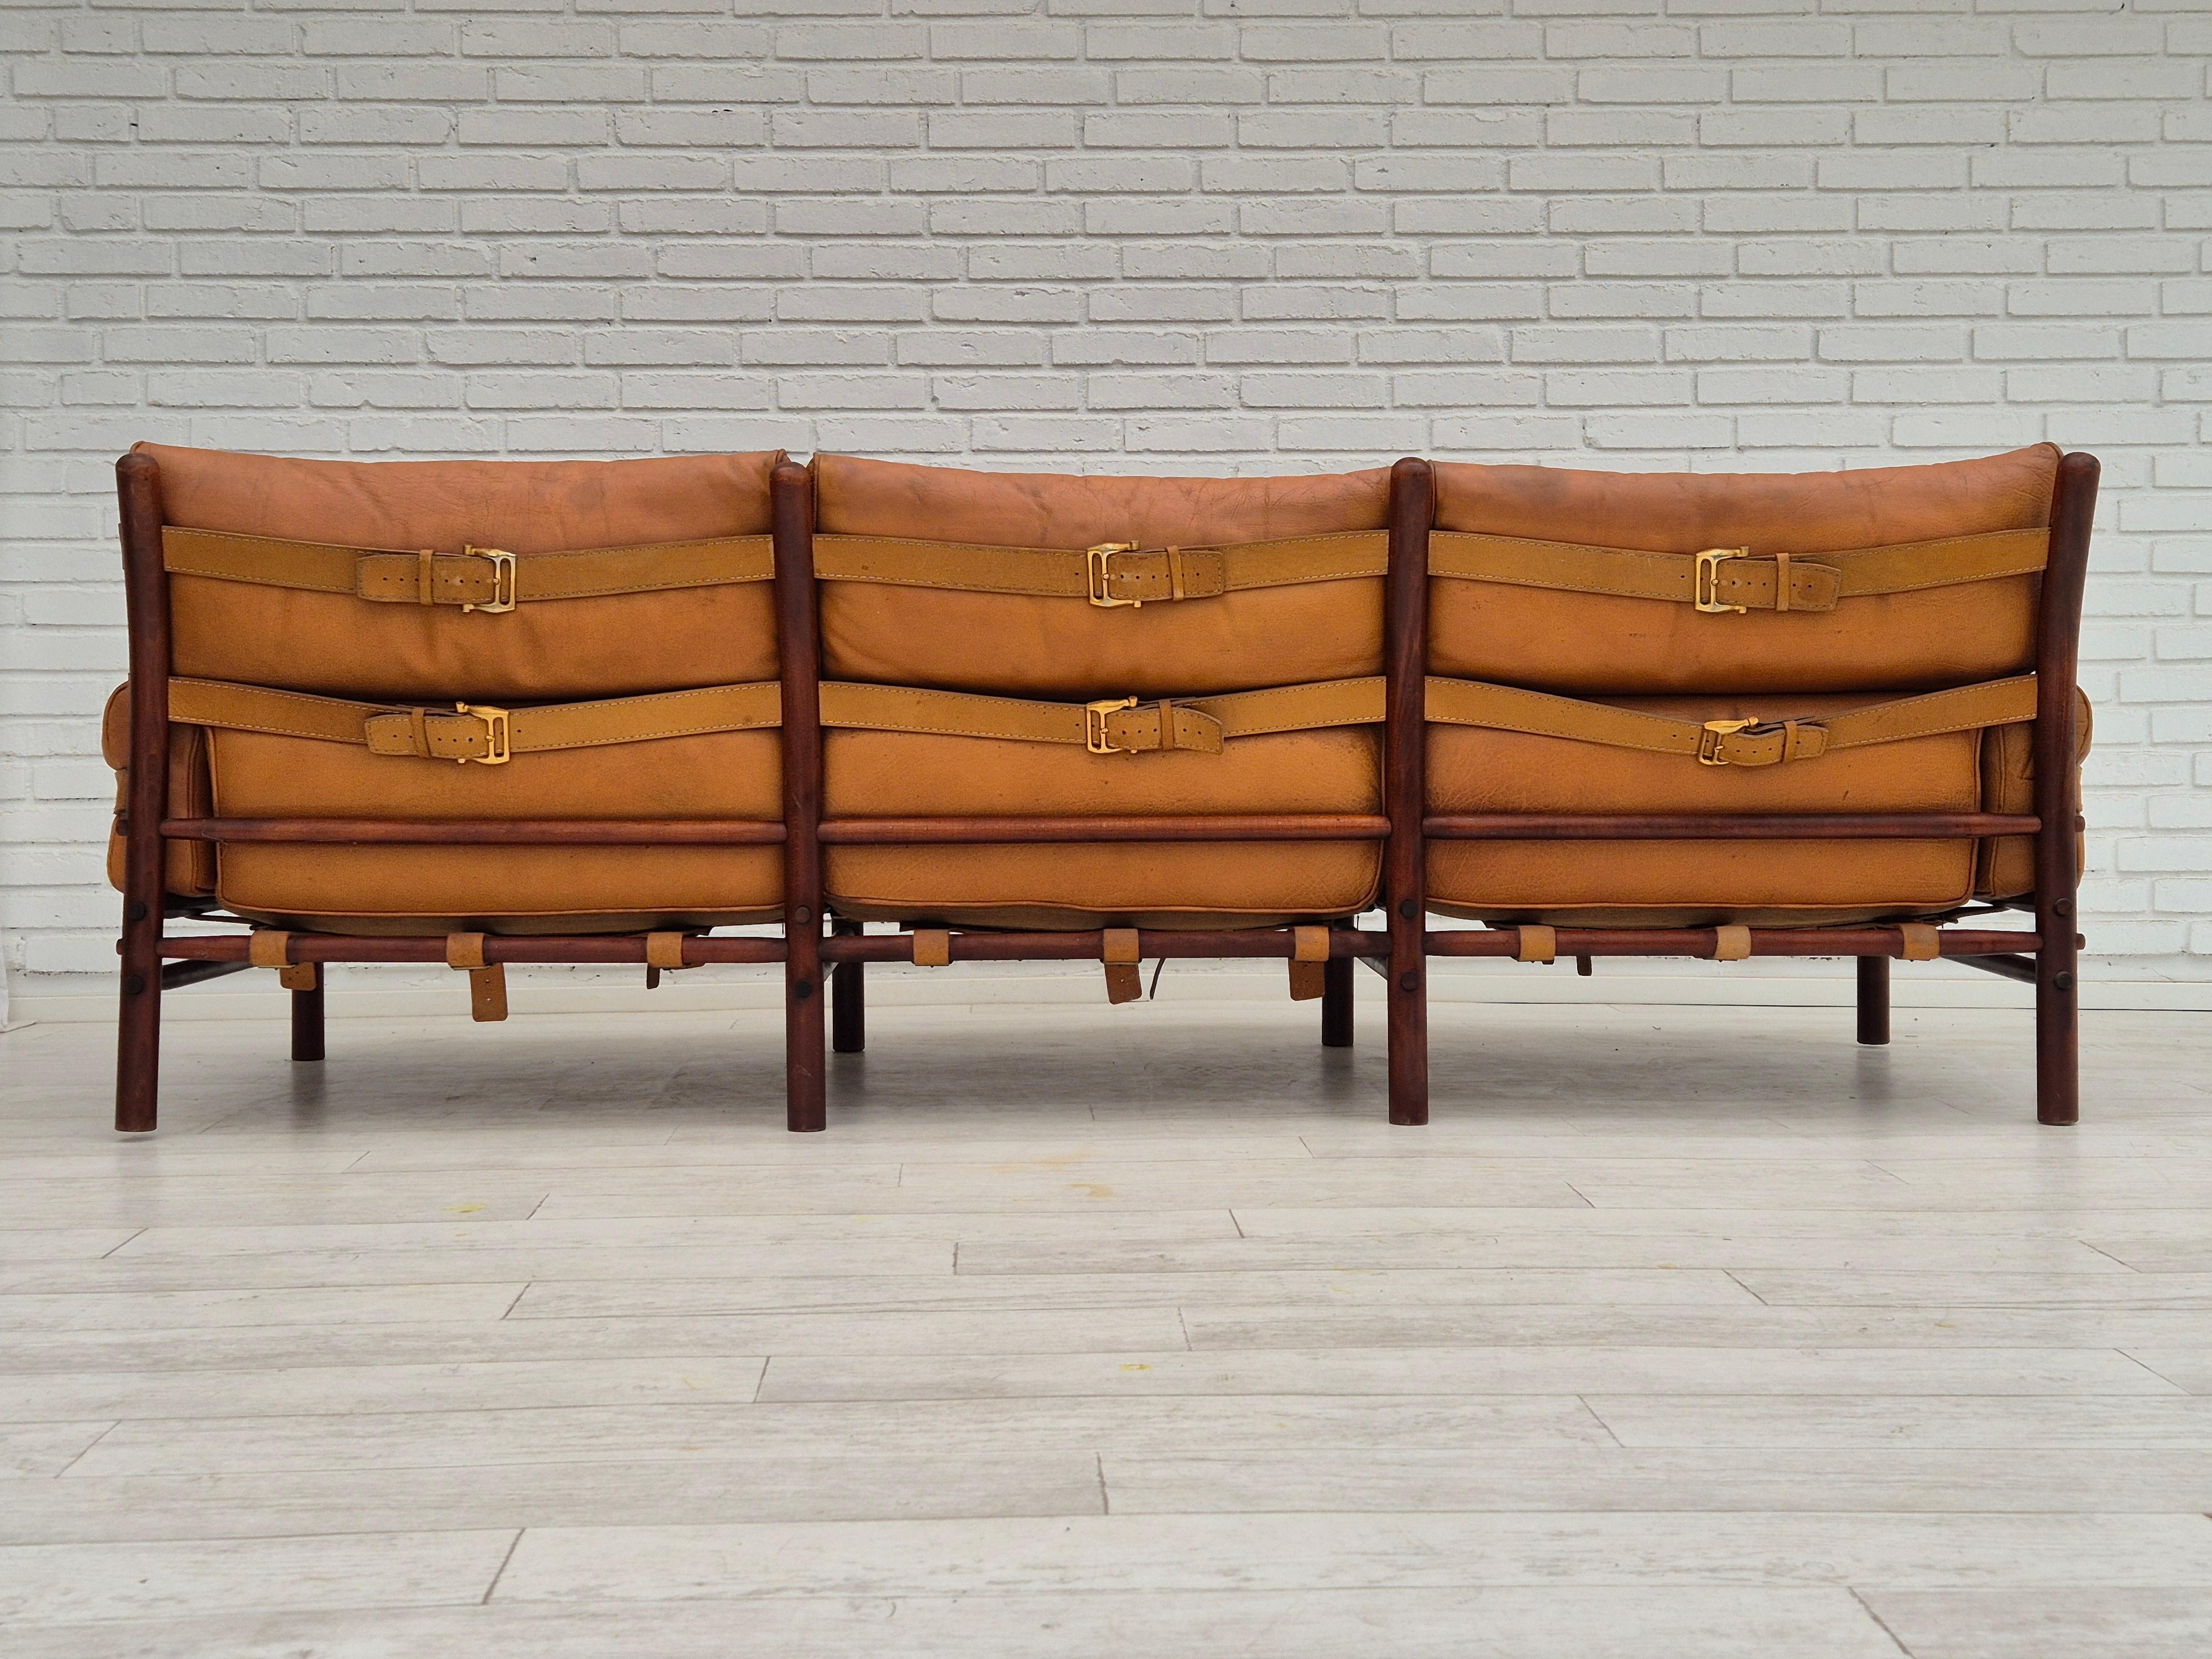 Swedish 1960s, Scandinavian design by Arne Norell, sofa, model 